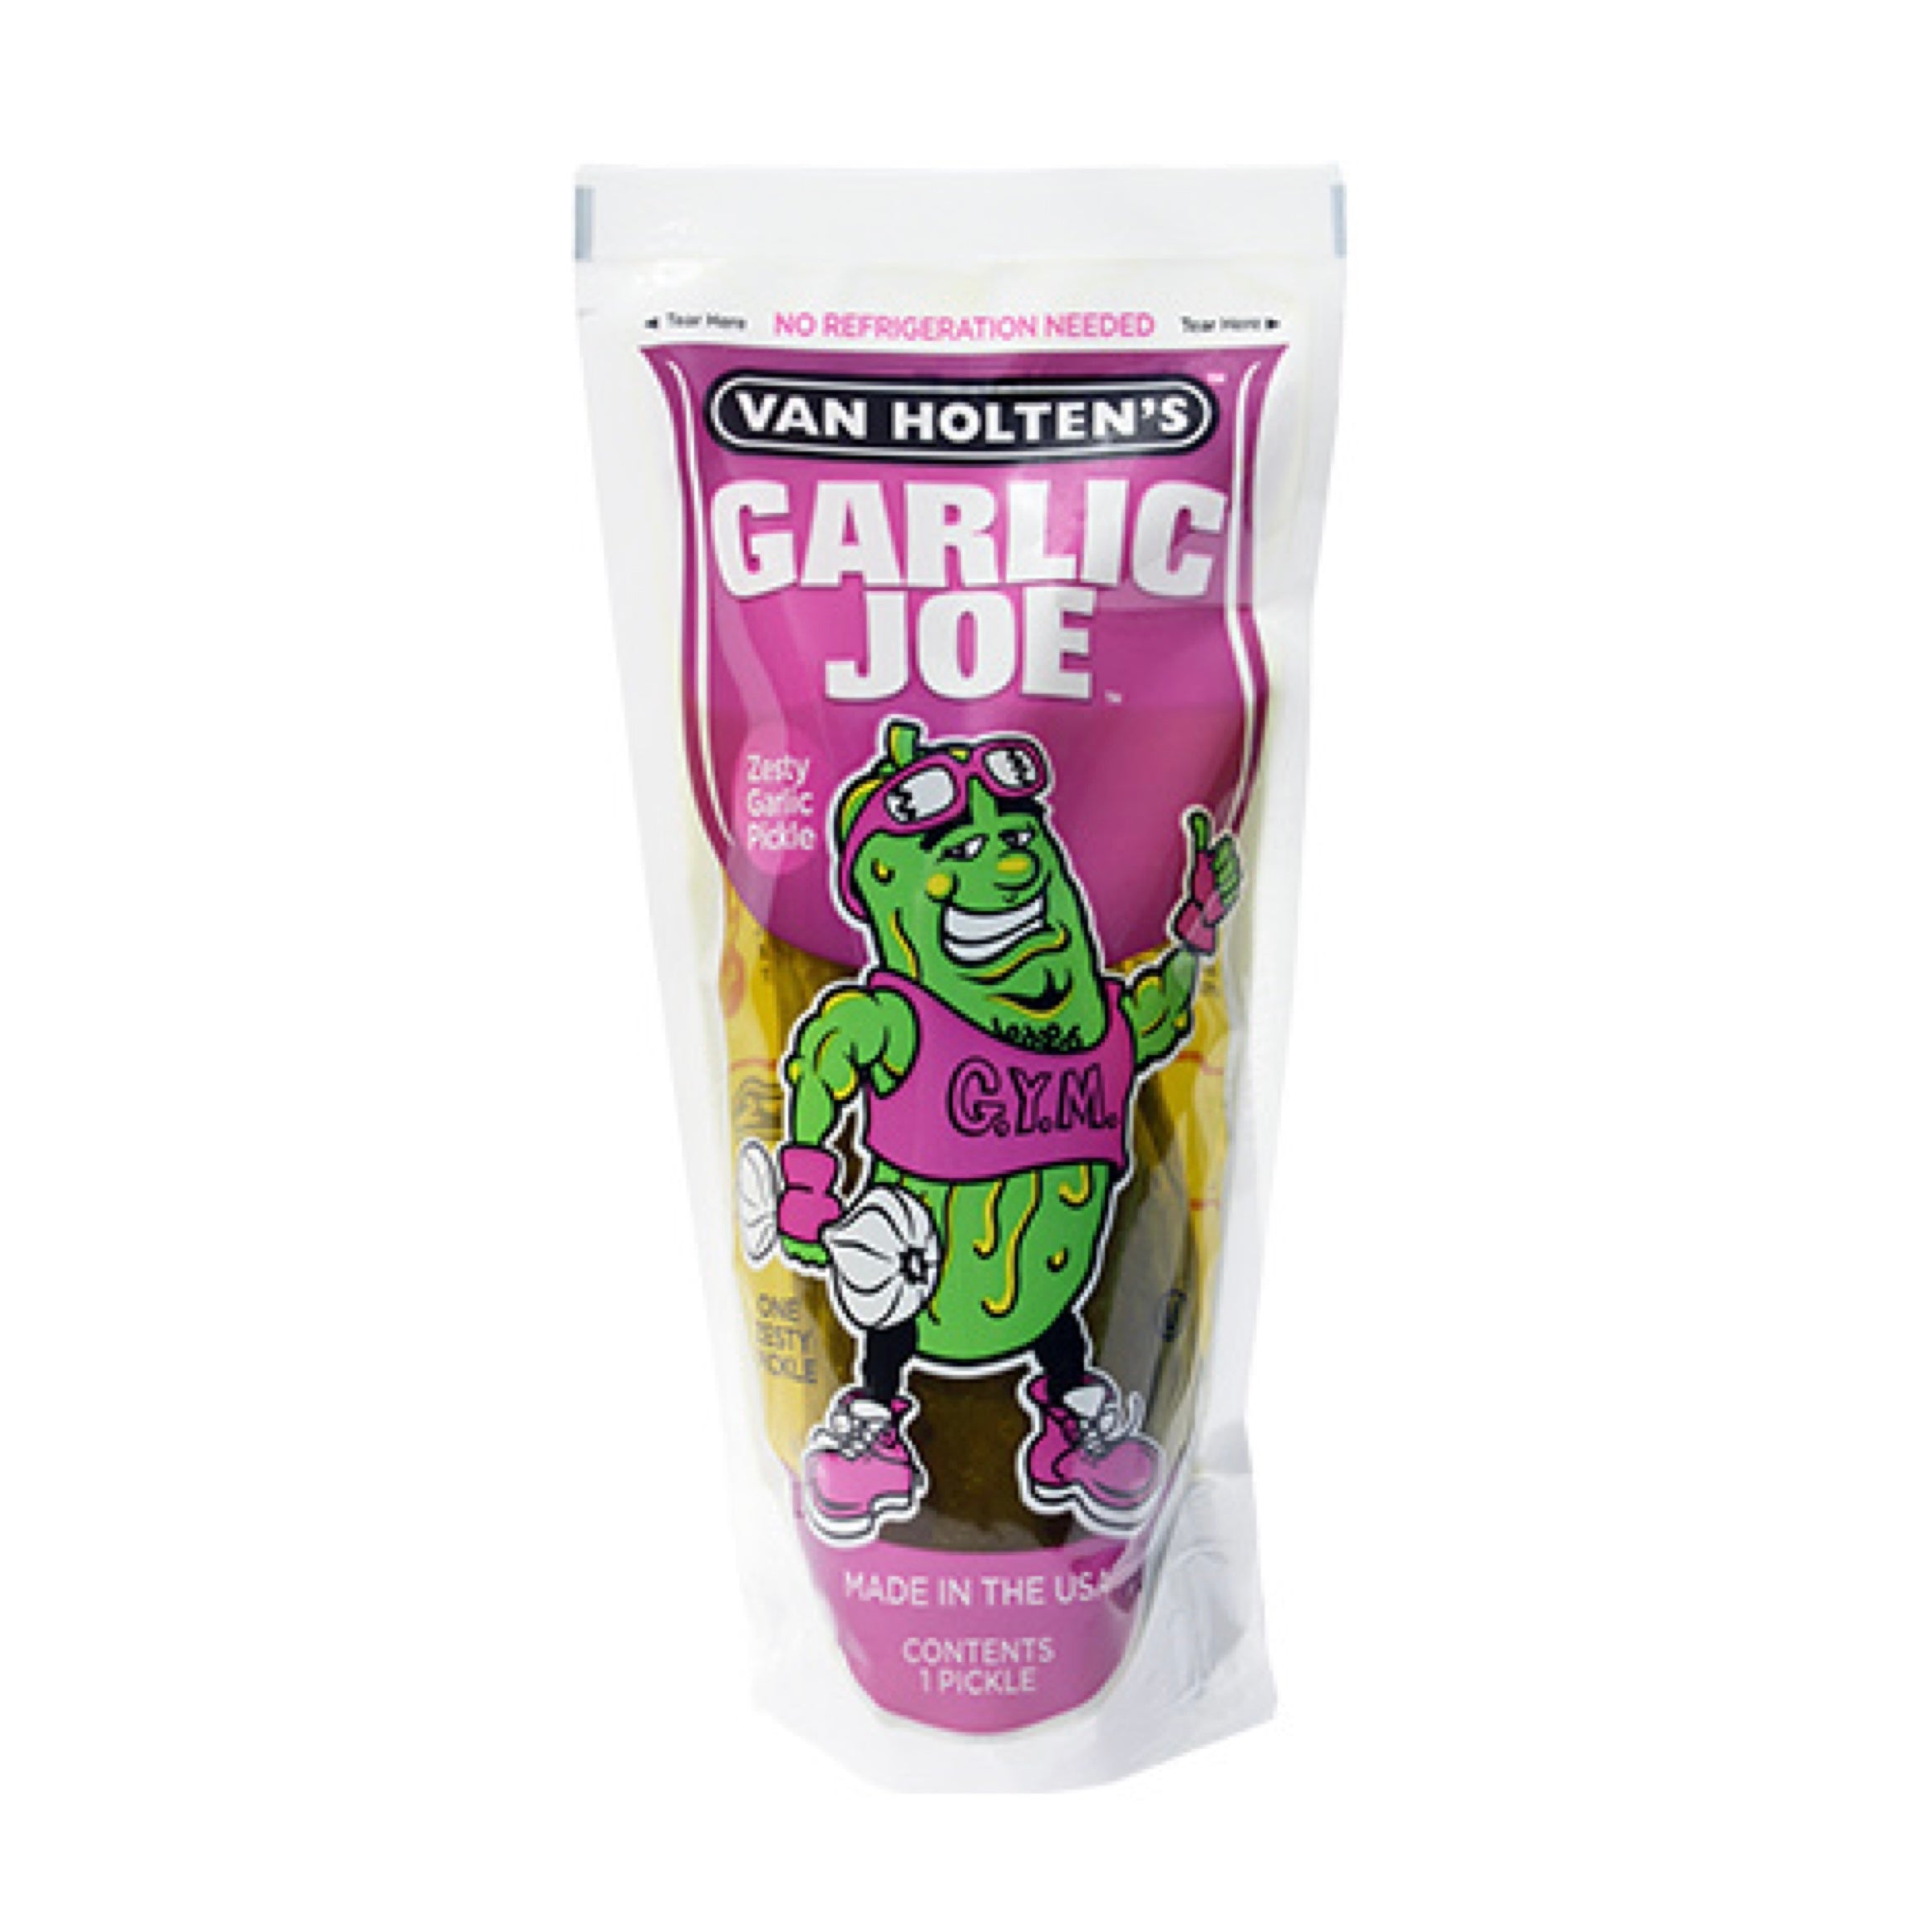 Van Holten’s Garlic Joe King Size Pickle